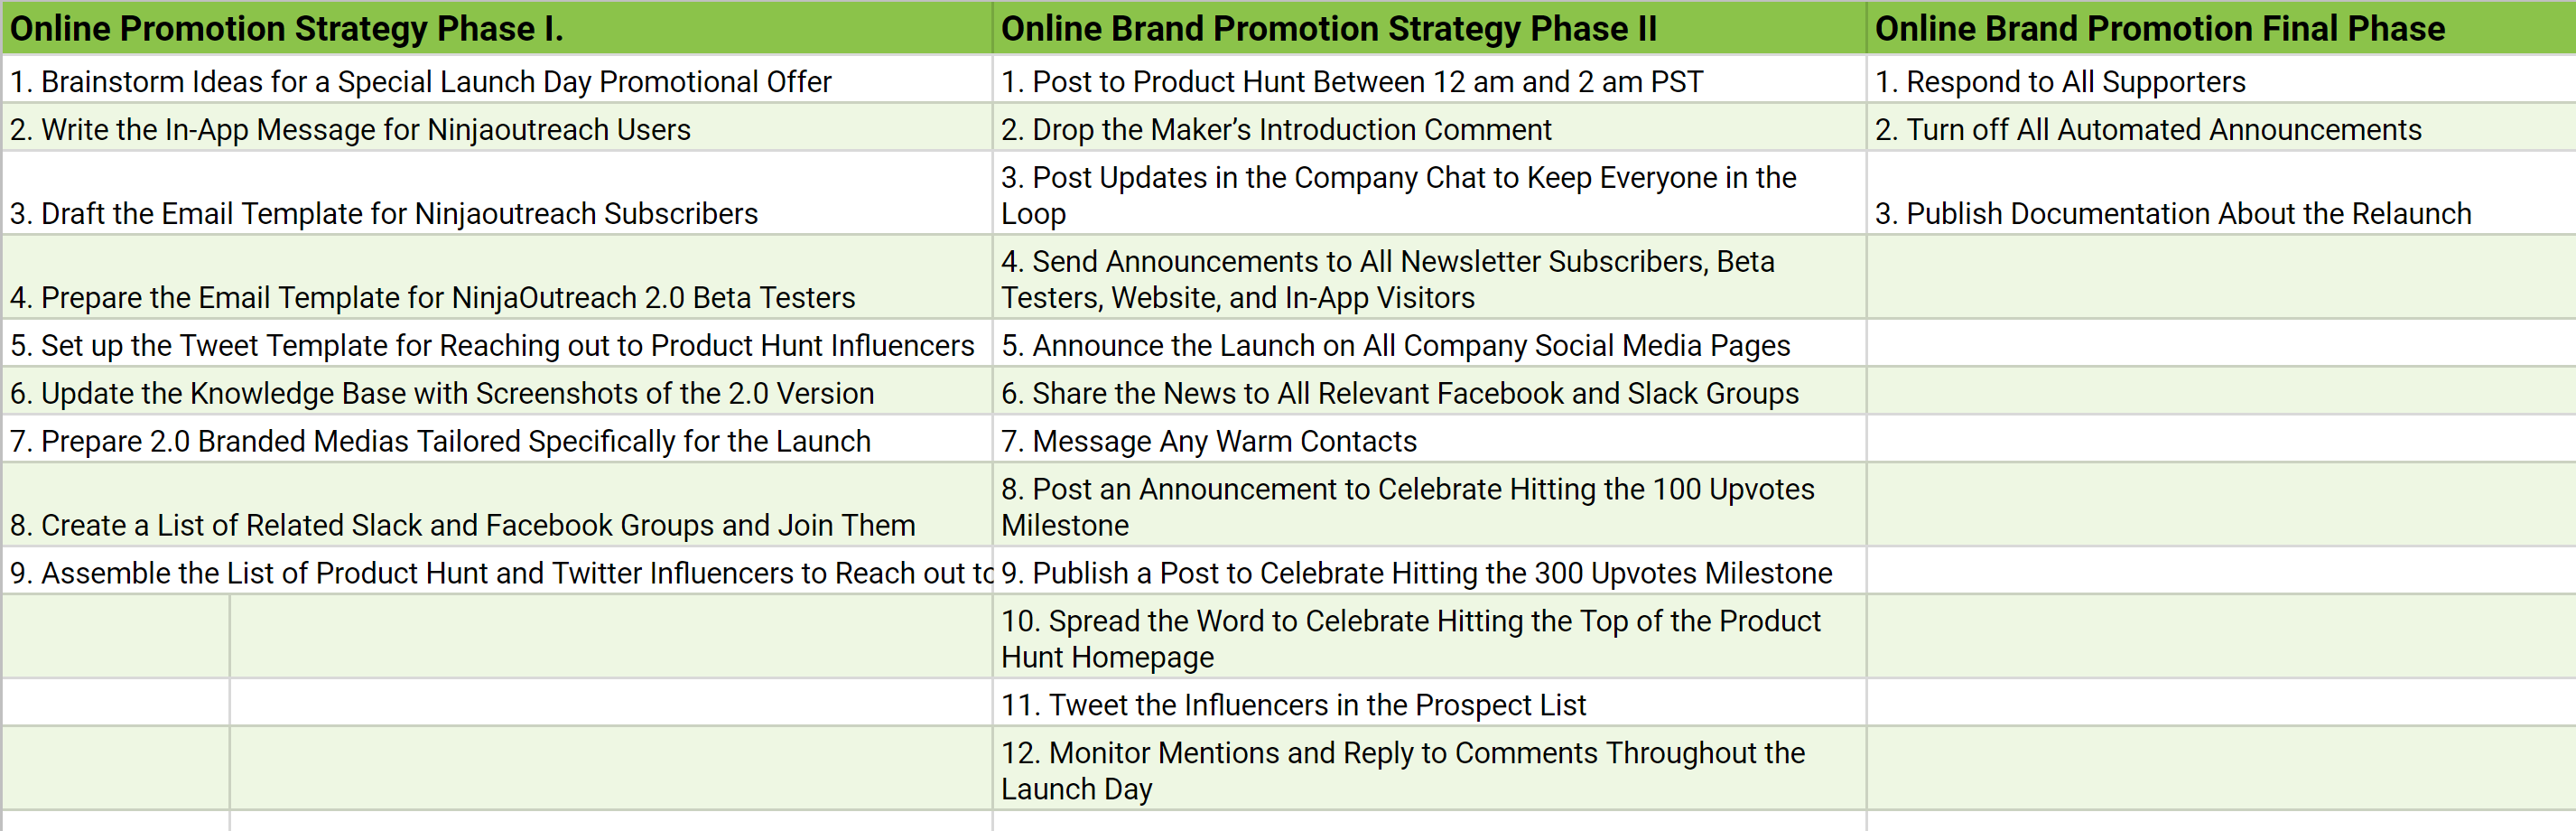 Online Brand Promotion Steps - NinjaOutreach